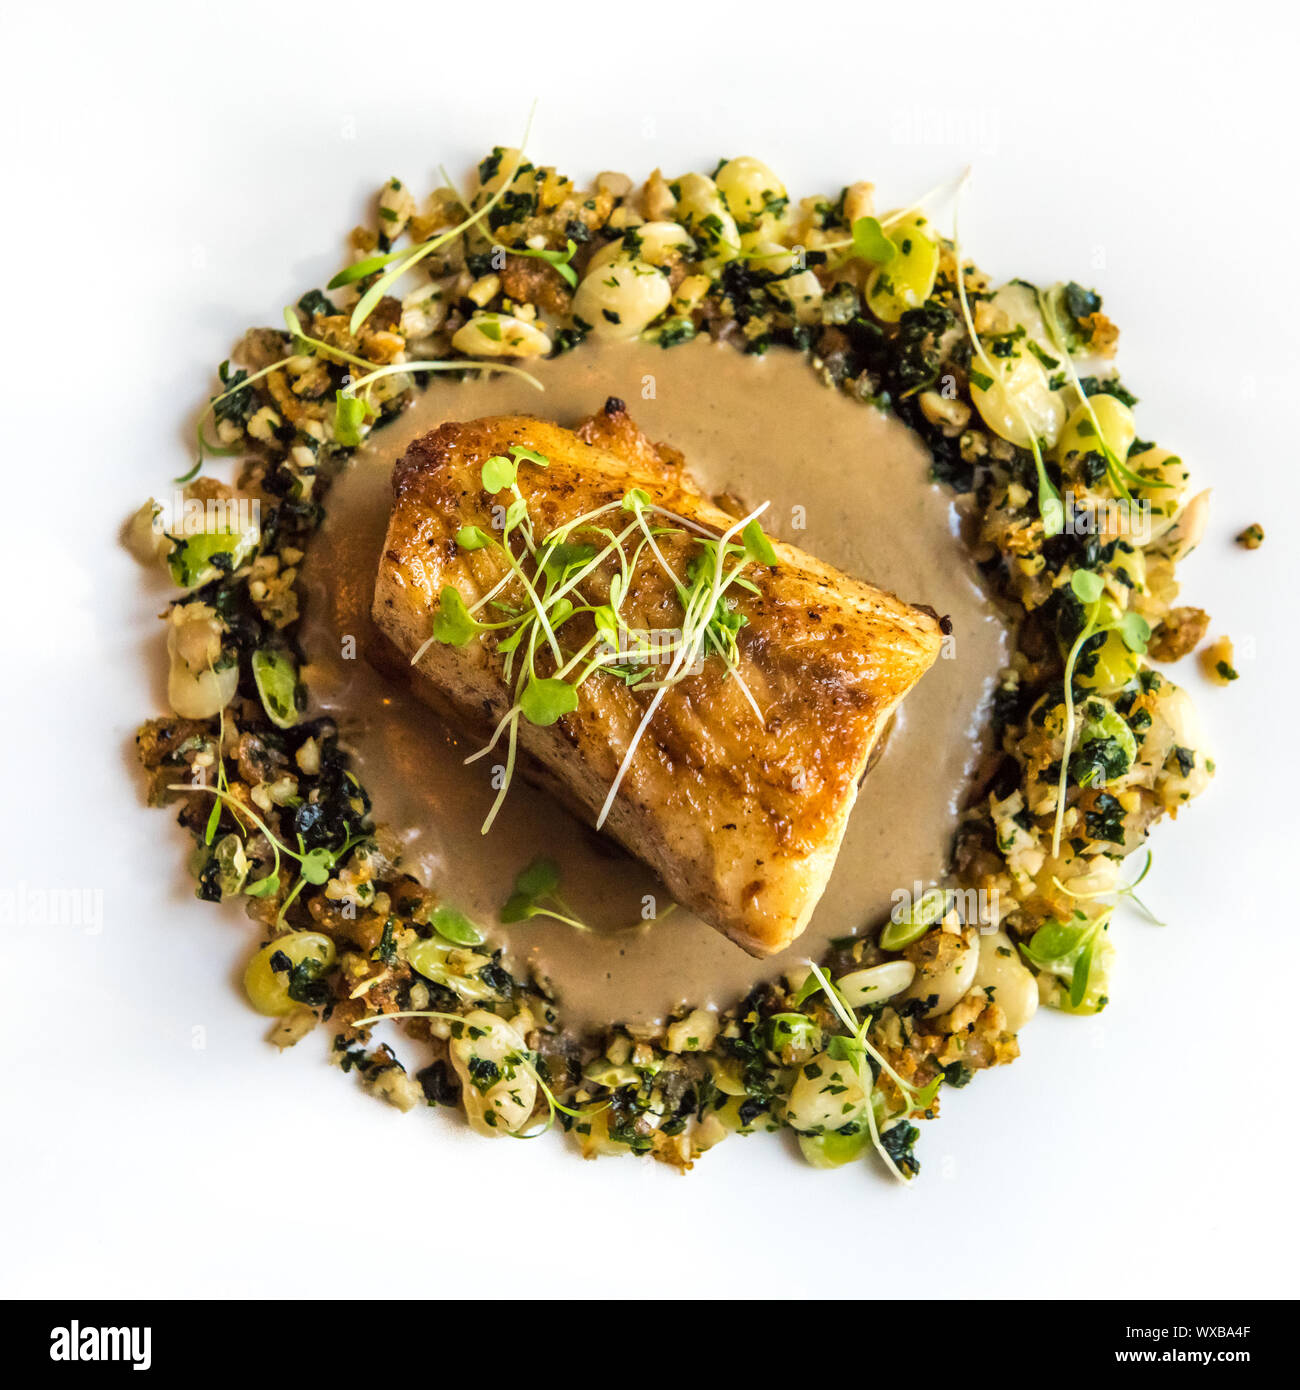 Delicious fish dish at gourmet restaurant Stock Photo